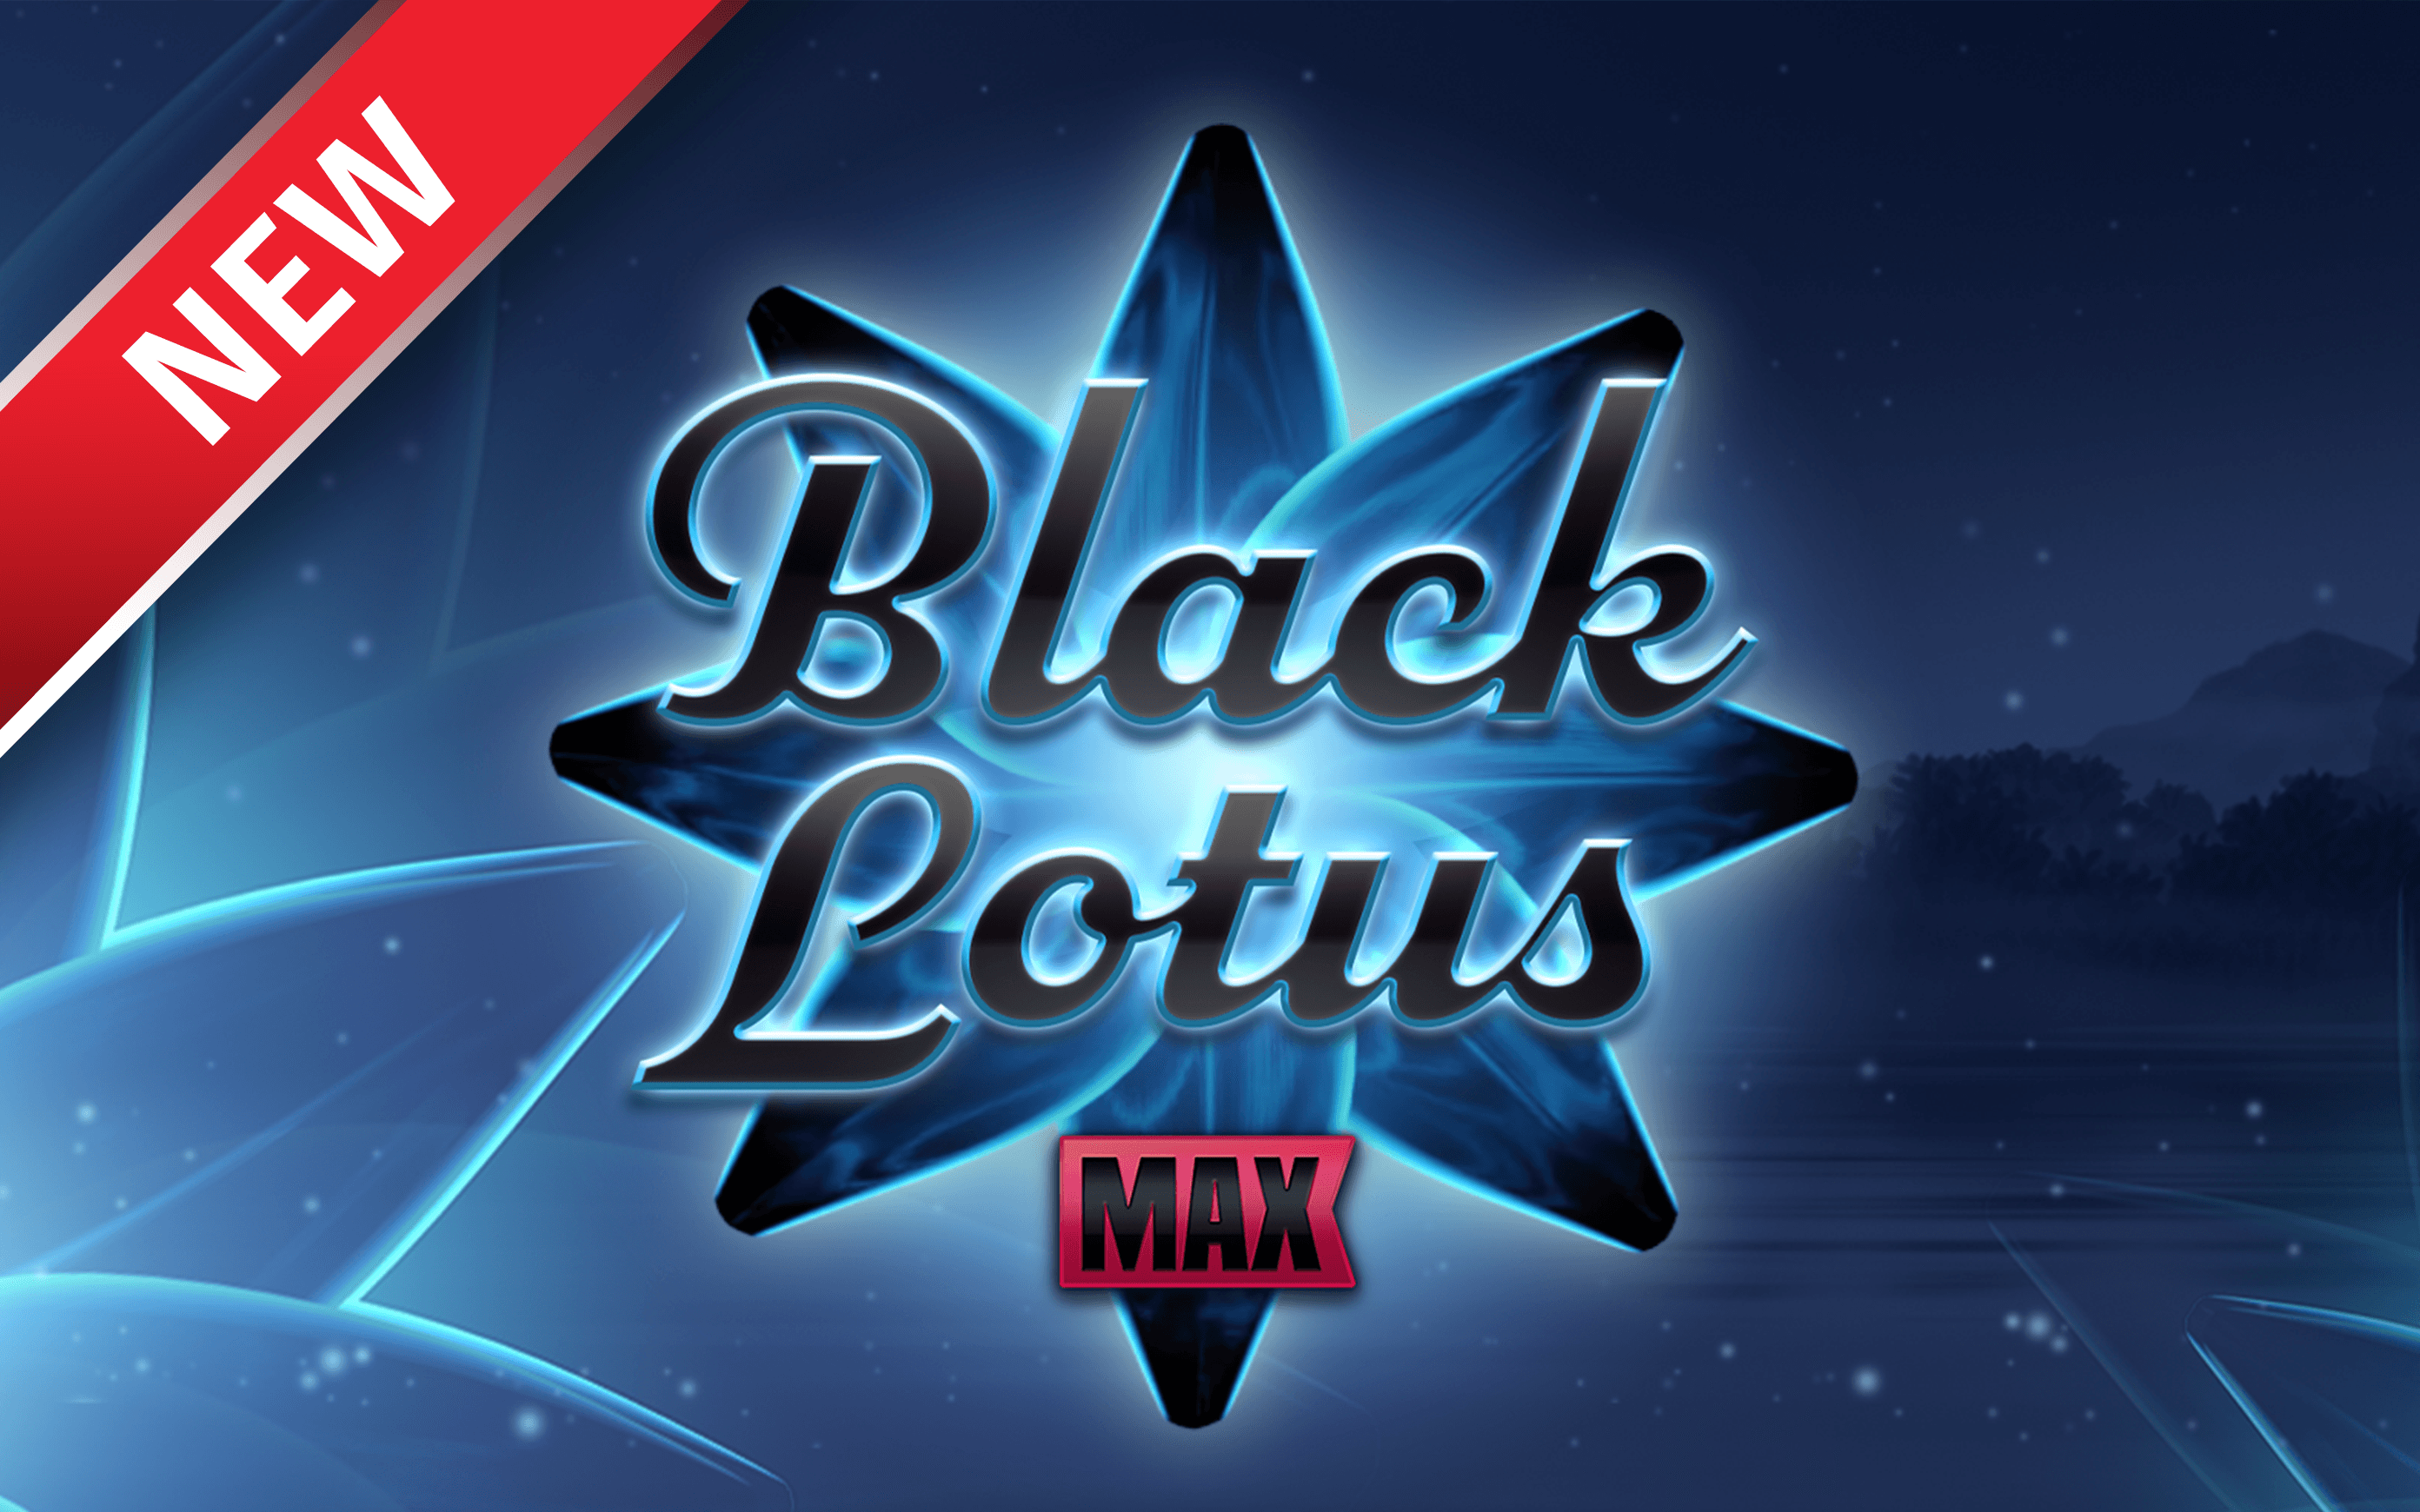 Play Black Lotus Max on Starcasino.be online casino